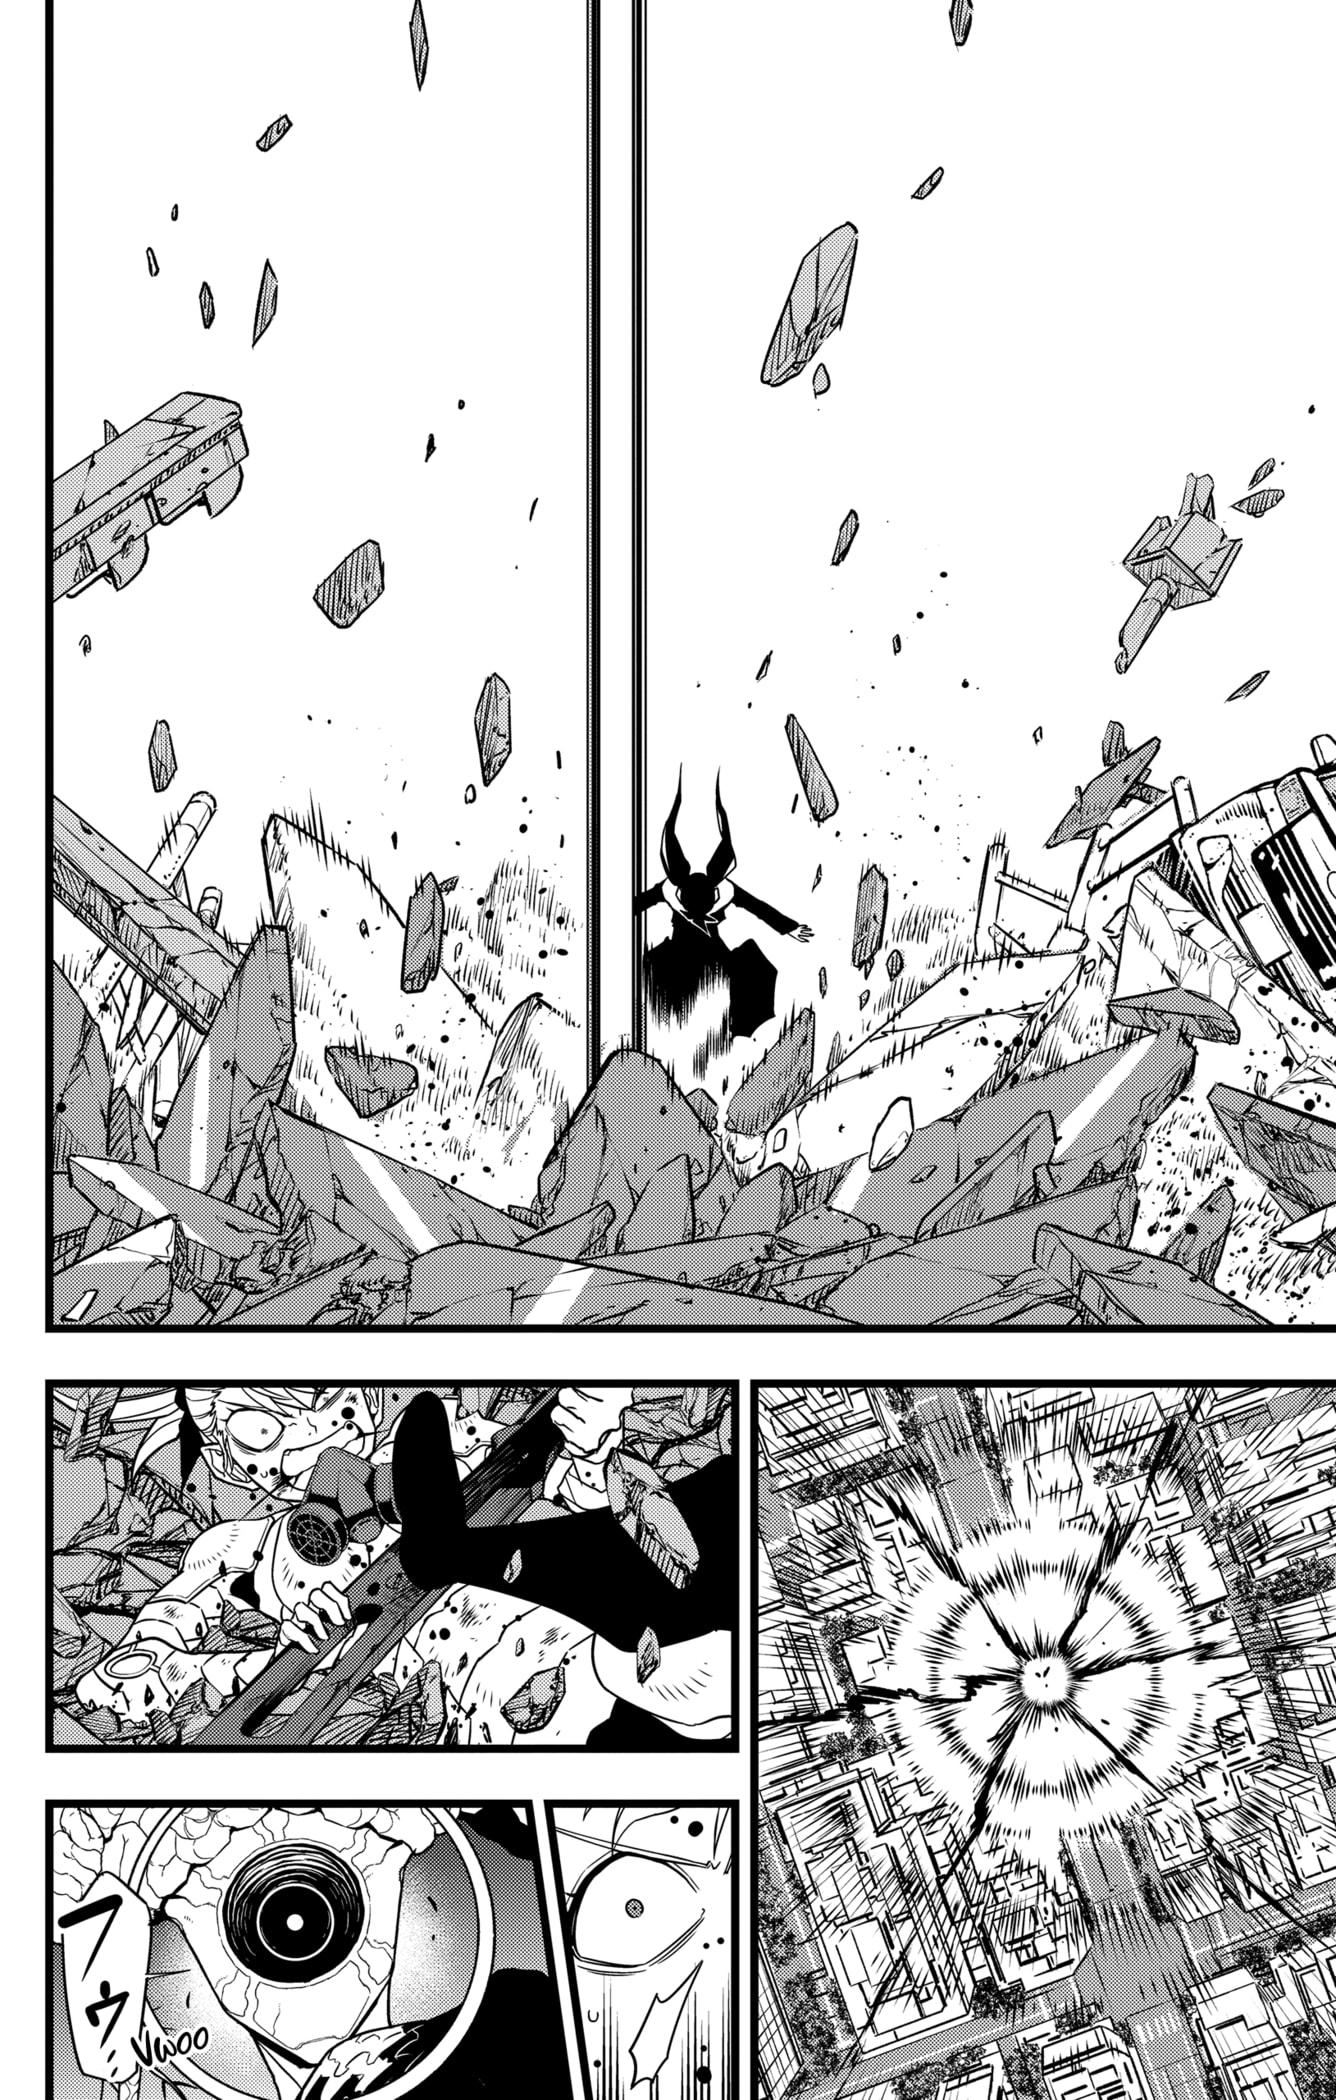 Kaiju No. 8 Chapter 78 page 12 - Mangakakalot